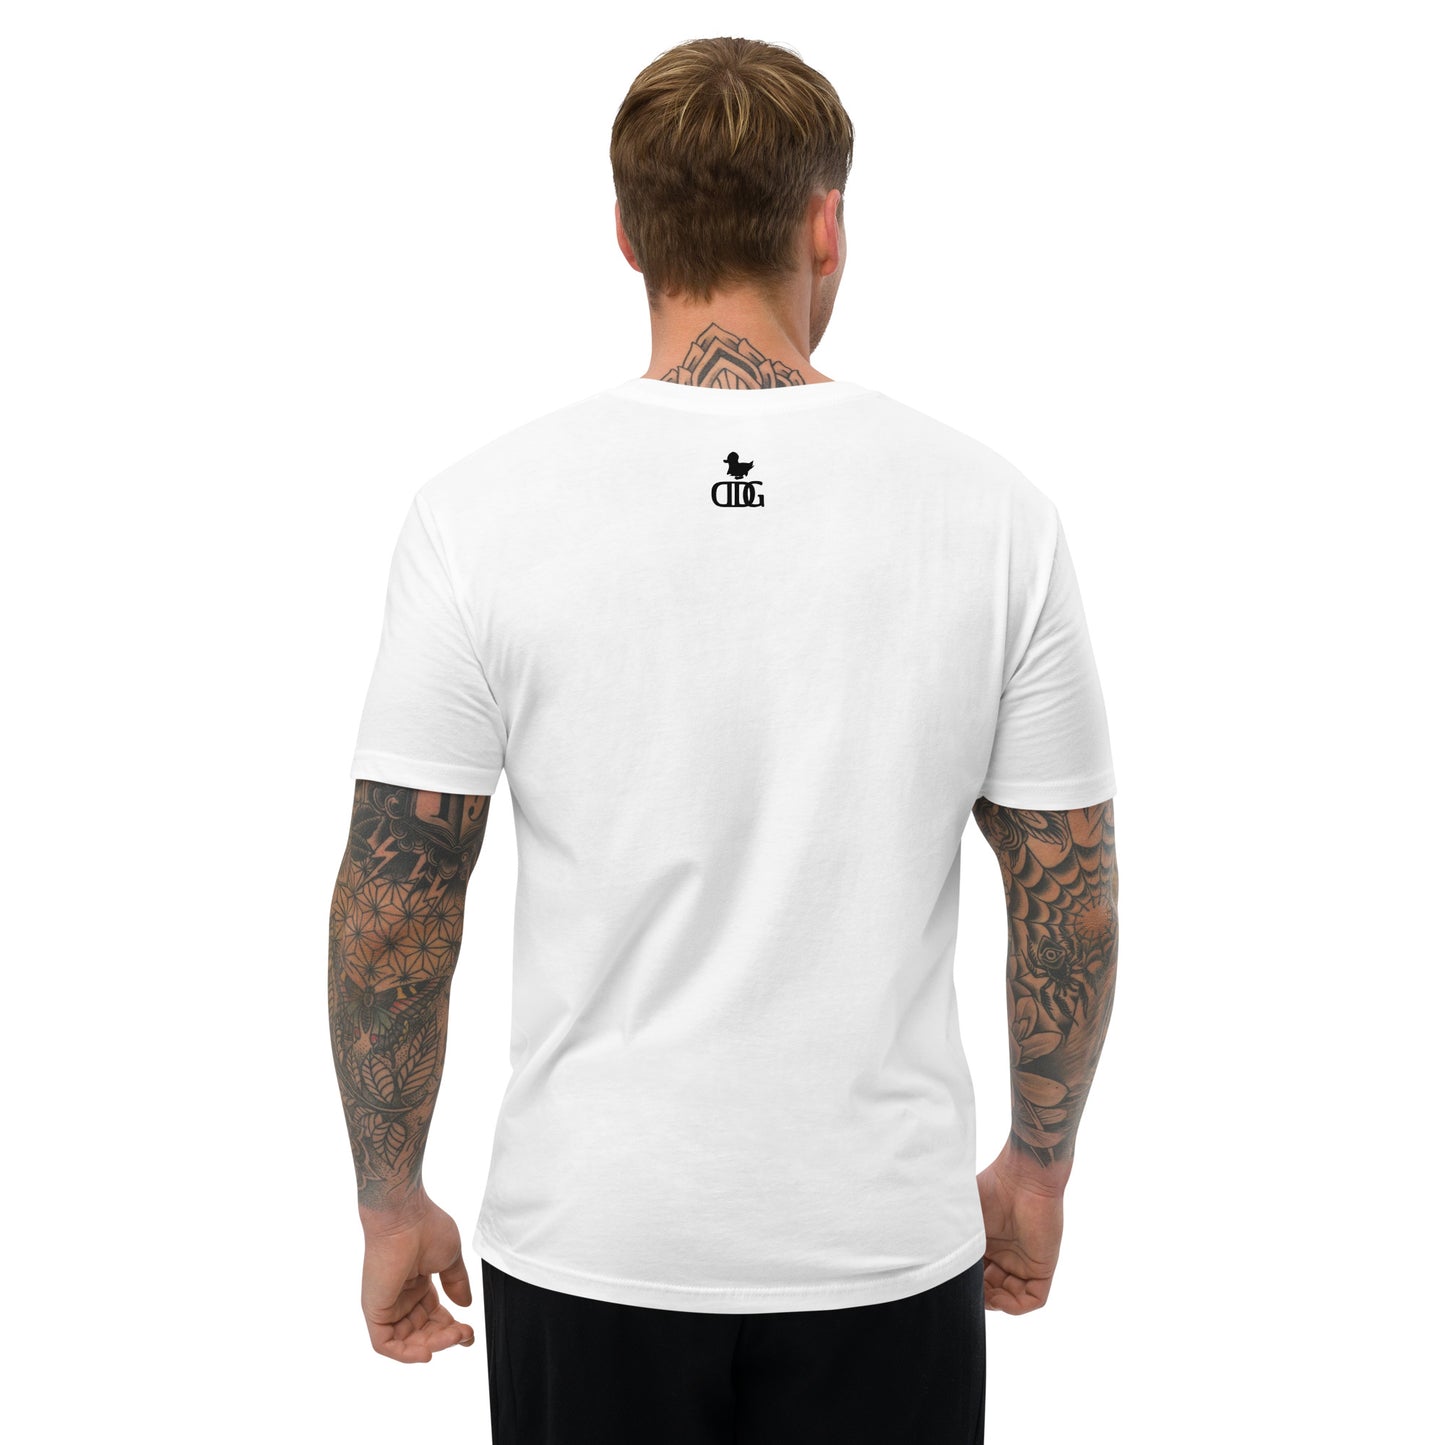 Men’s Short Sleeve Neo bat T-shirt